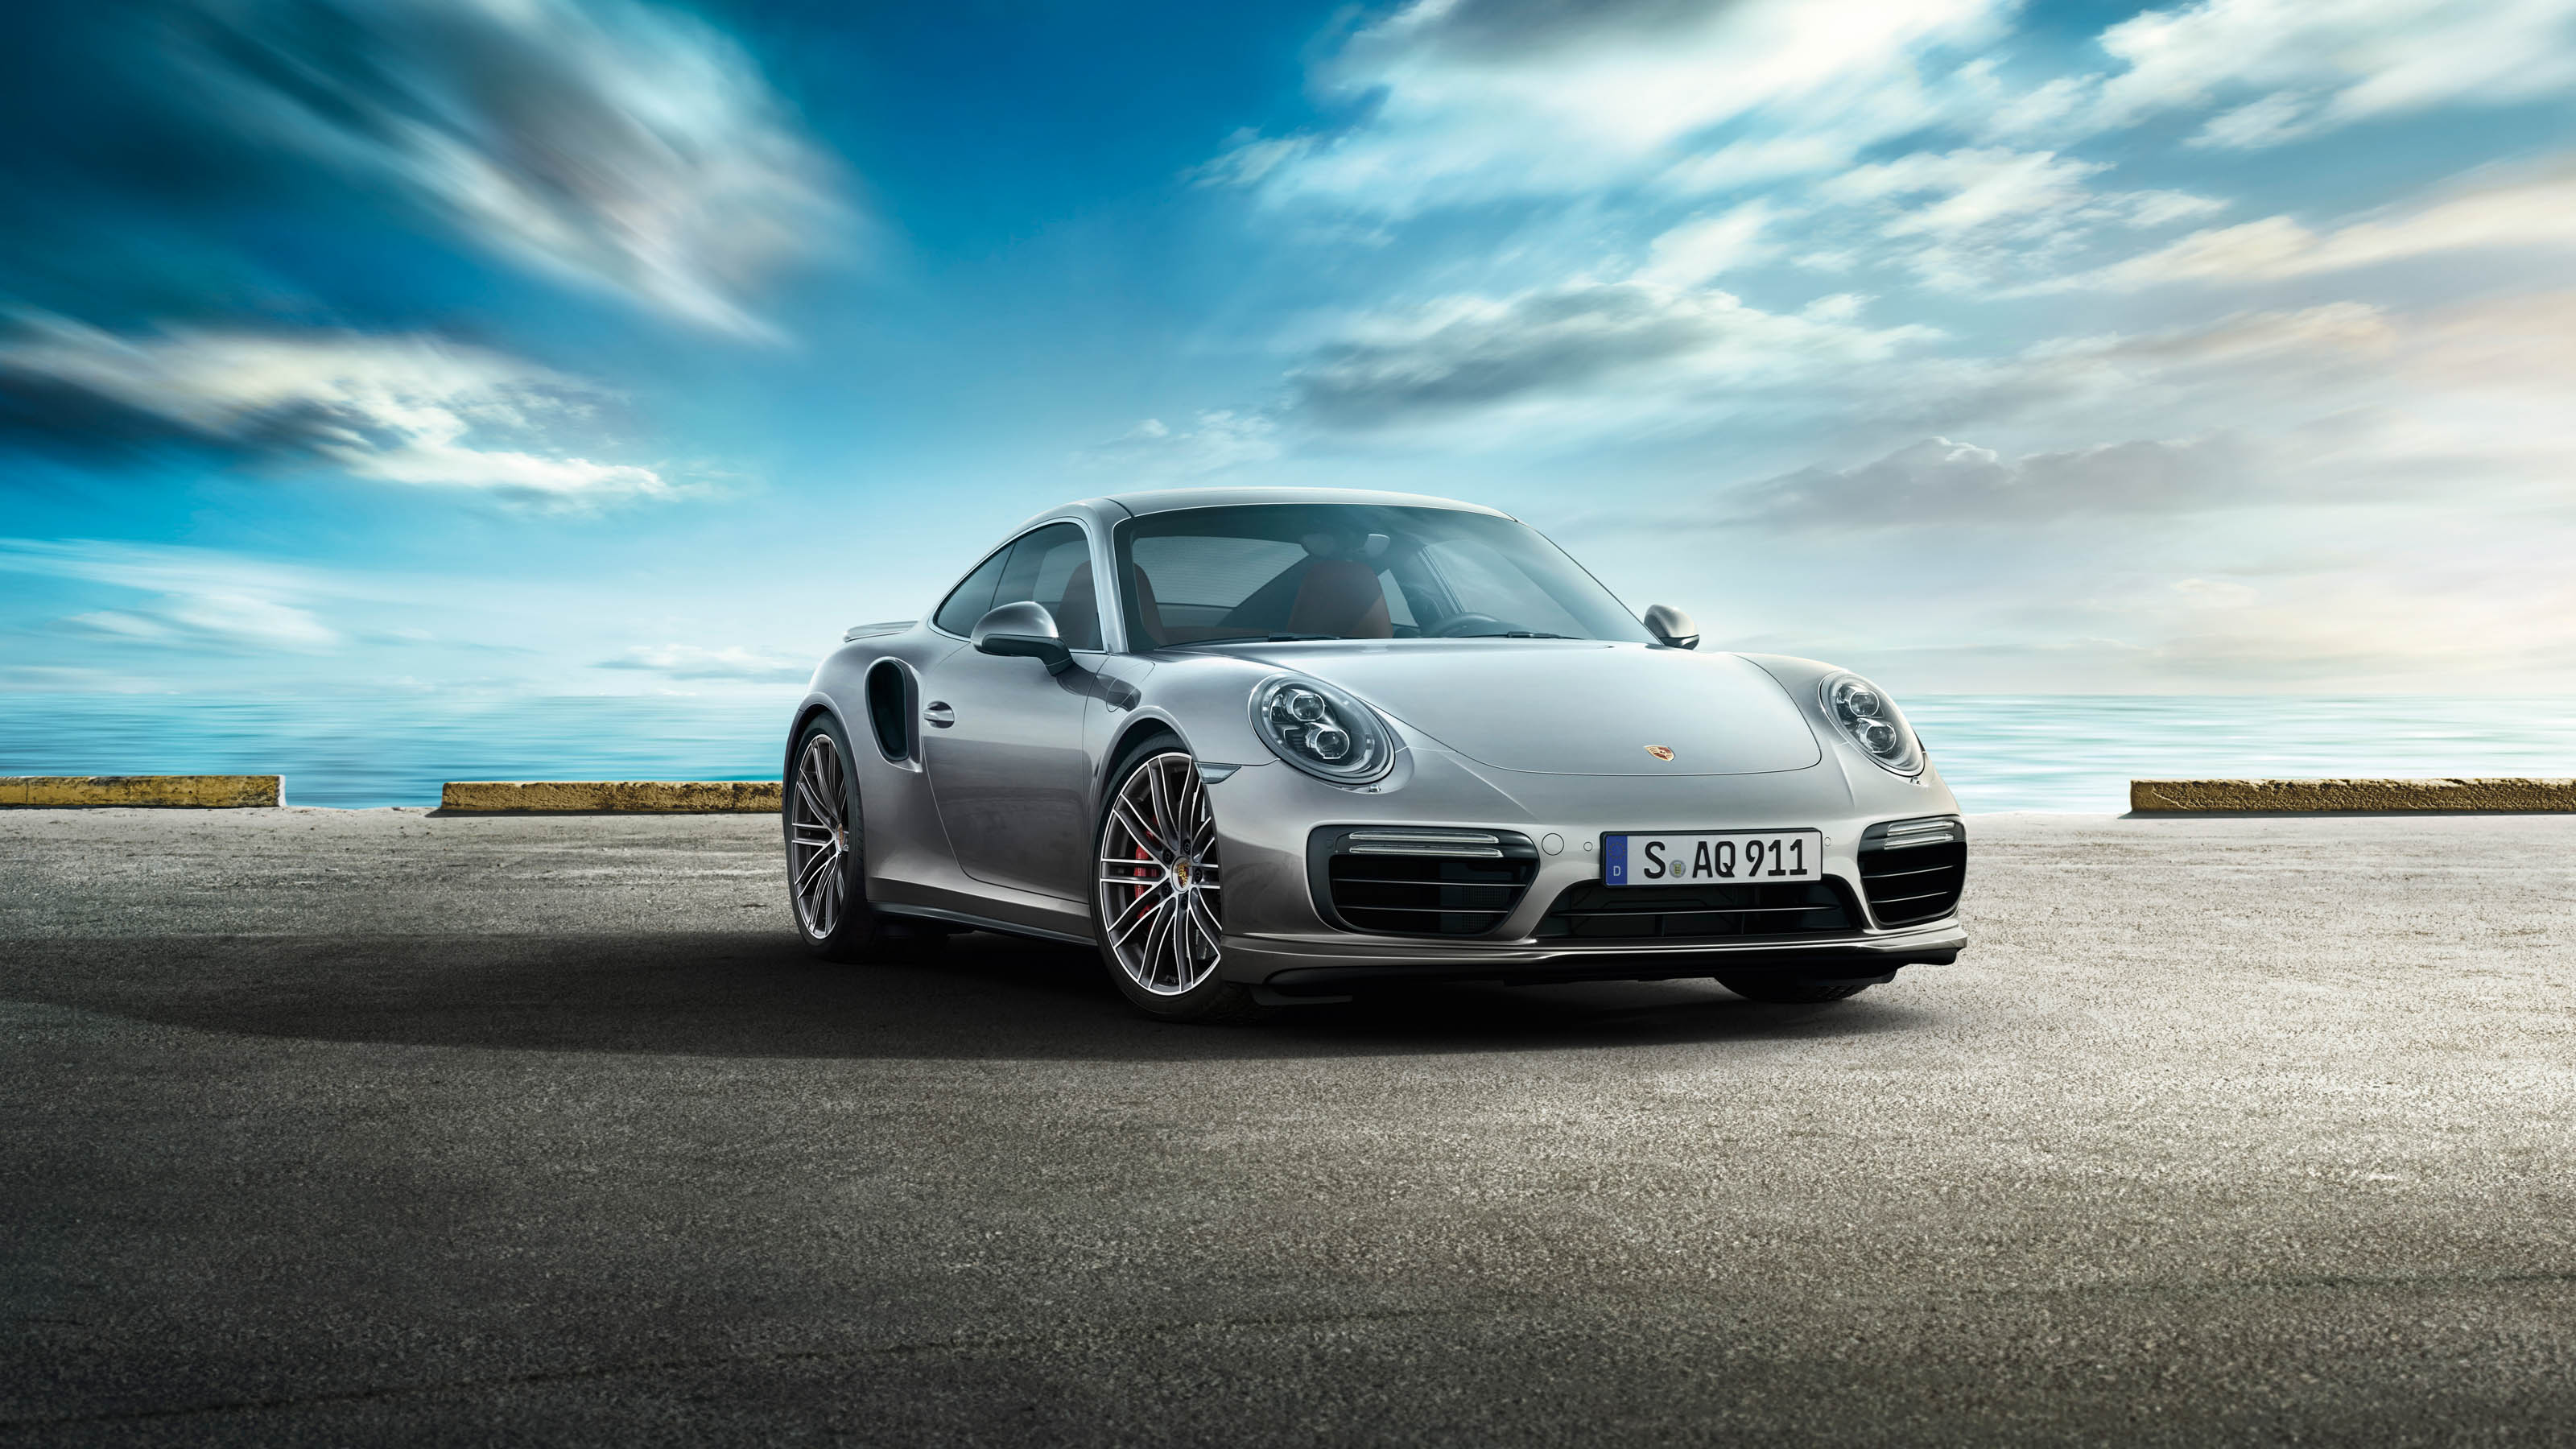 Descarga gratis la imagen Porsche, Coche, Porsche 911, Vehículos, Coche De Plata, Porsche 911 Turbo en el escritorio de tu PC